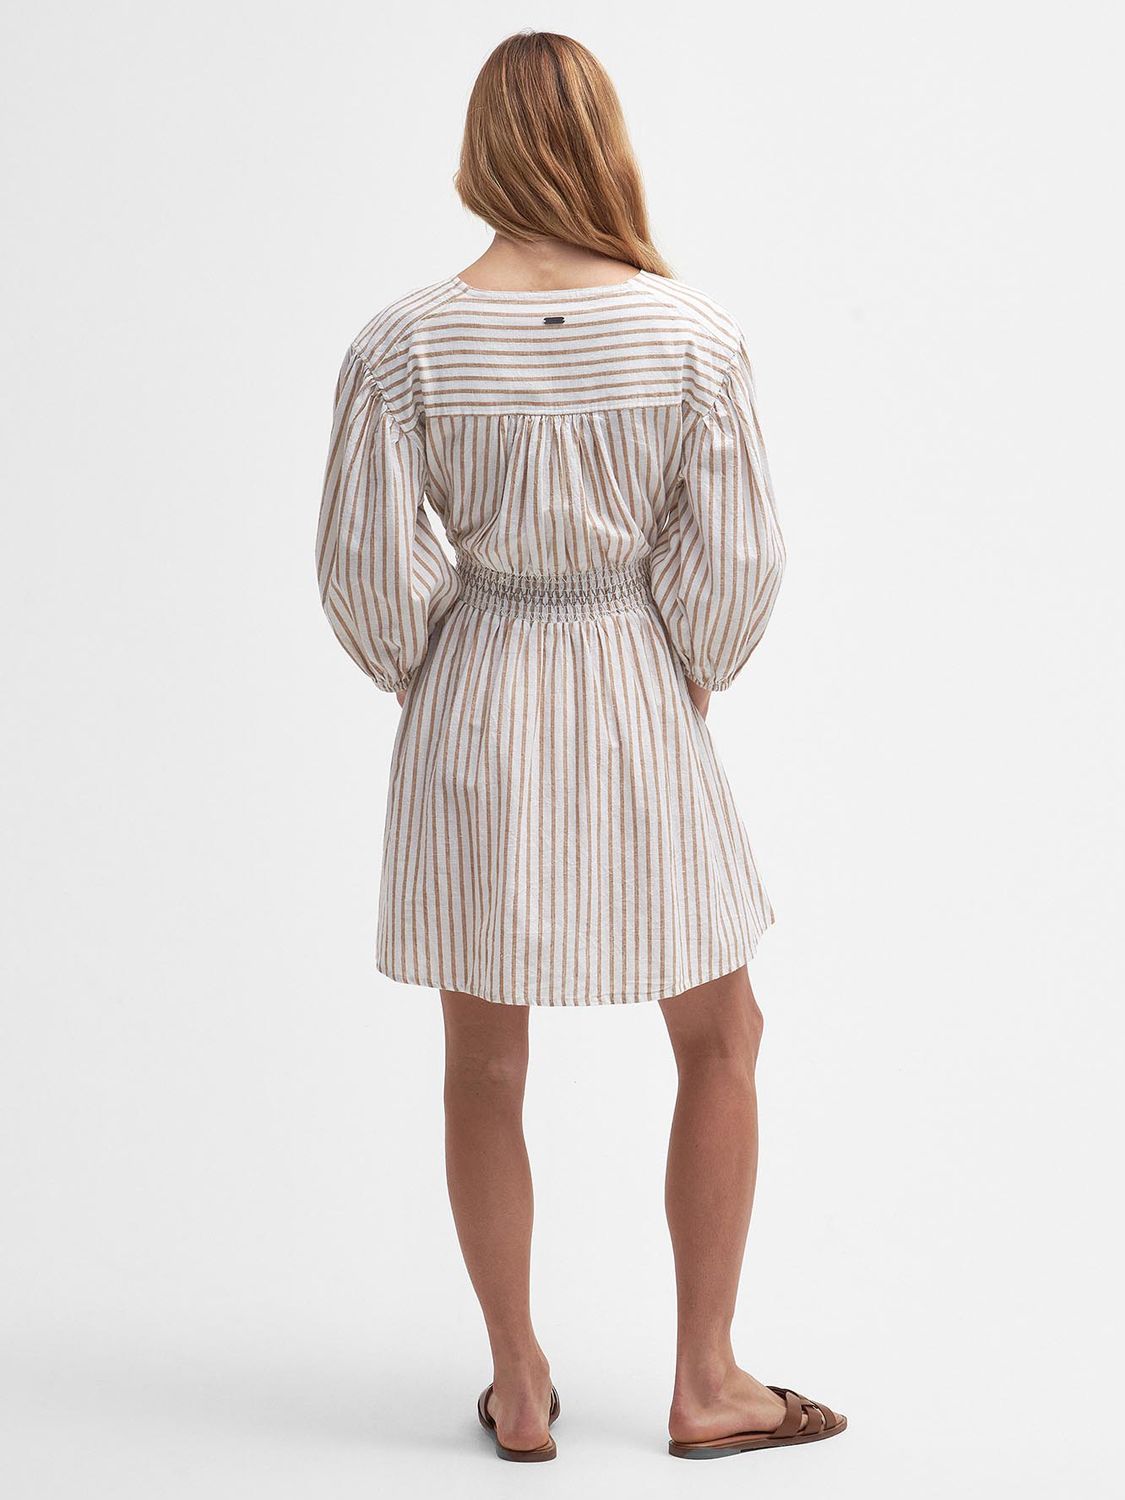 Barbour Ella Stripe Mini Dress, White/Tannin, 16